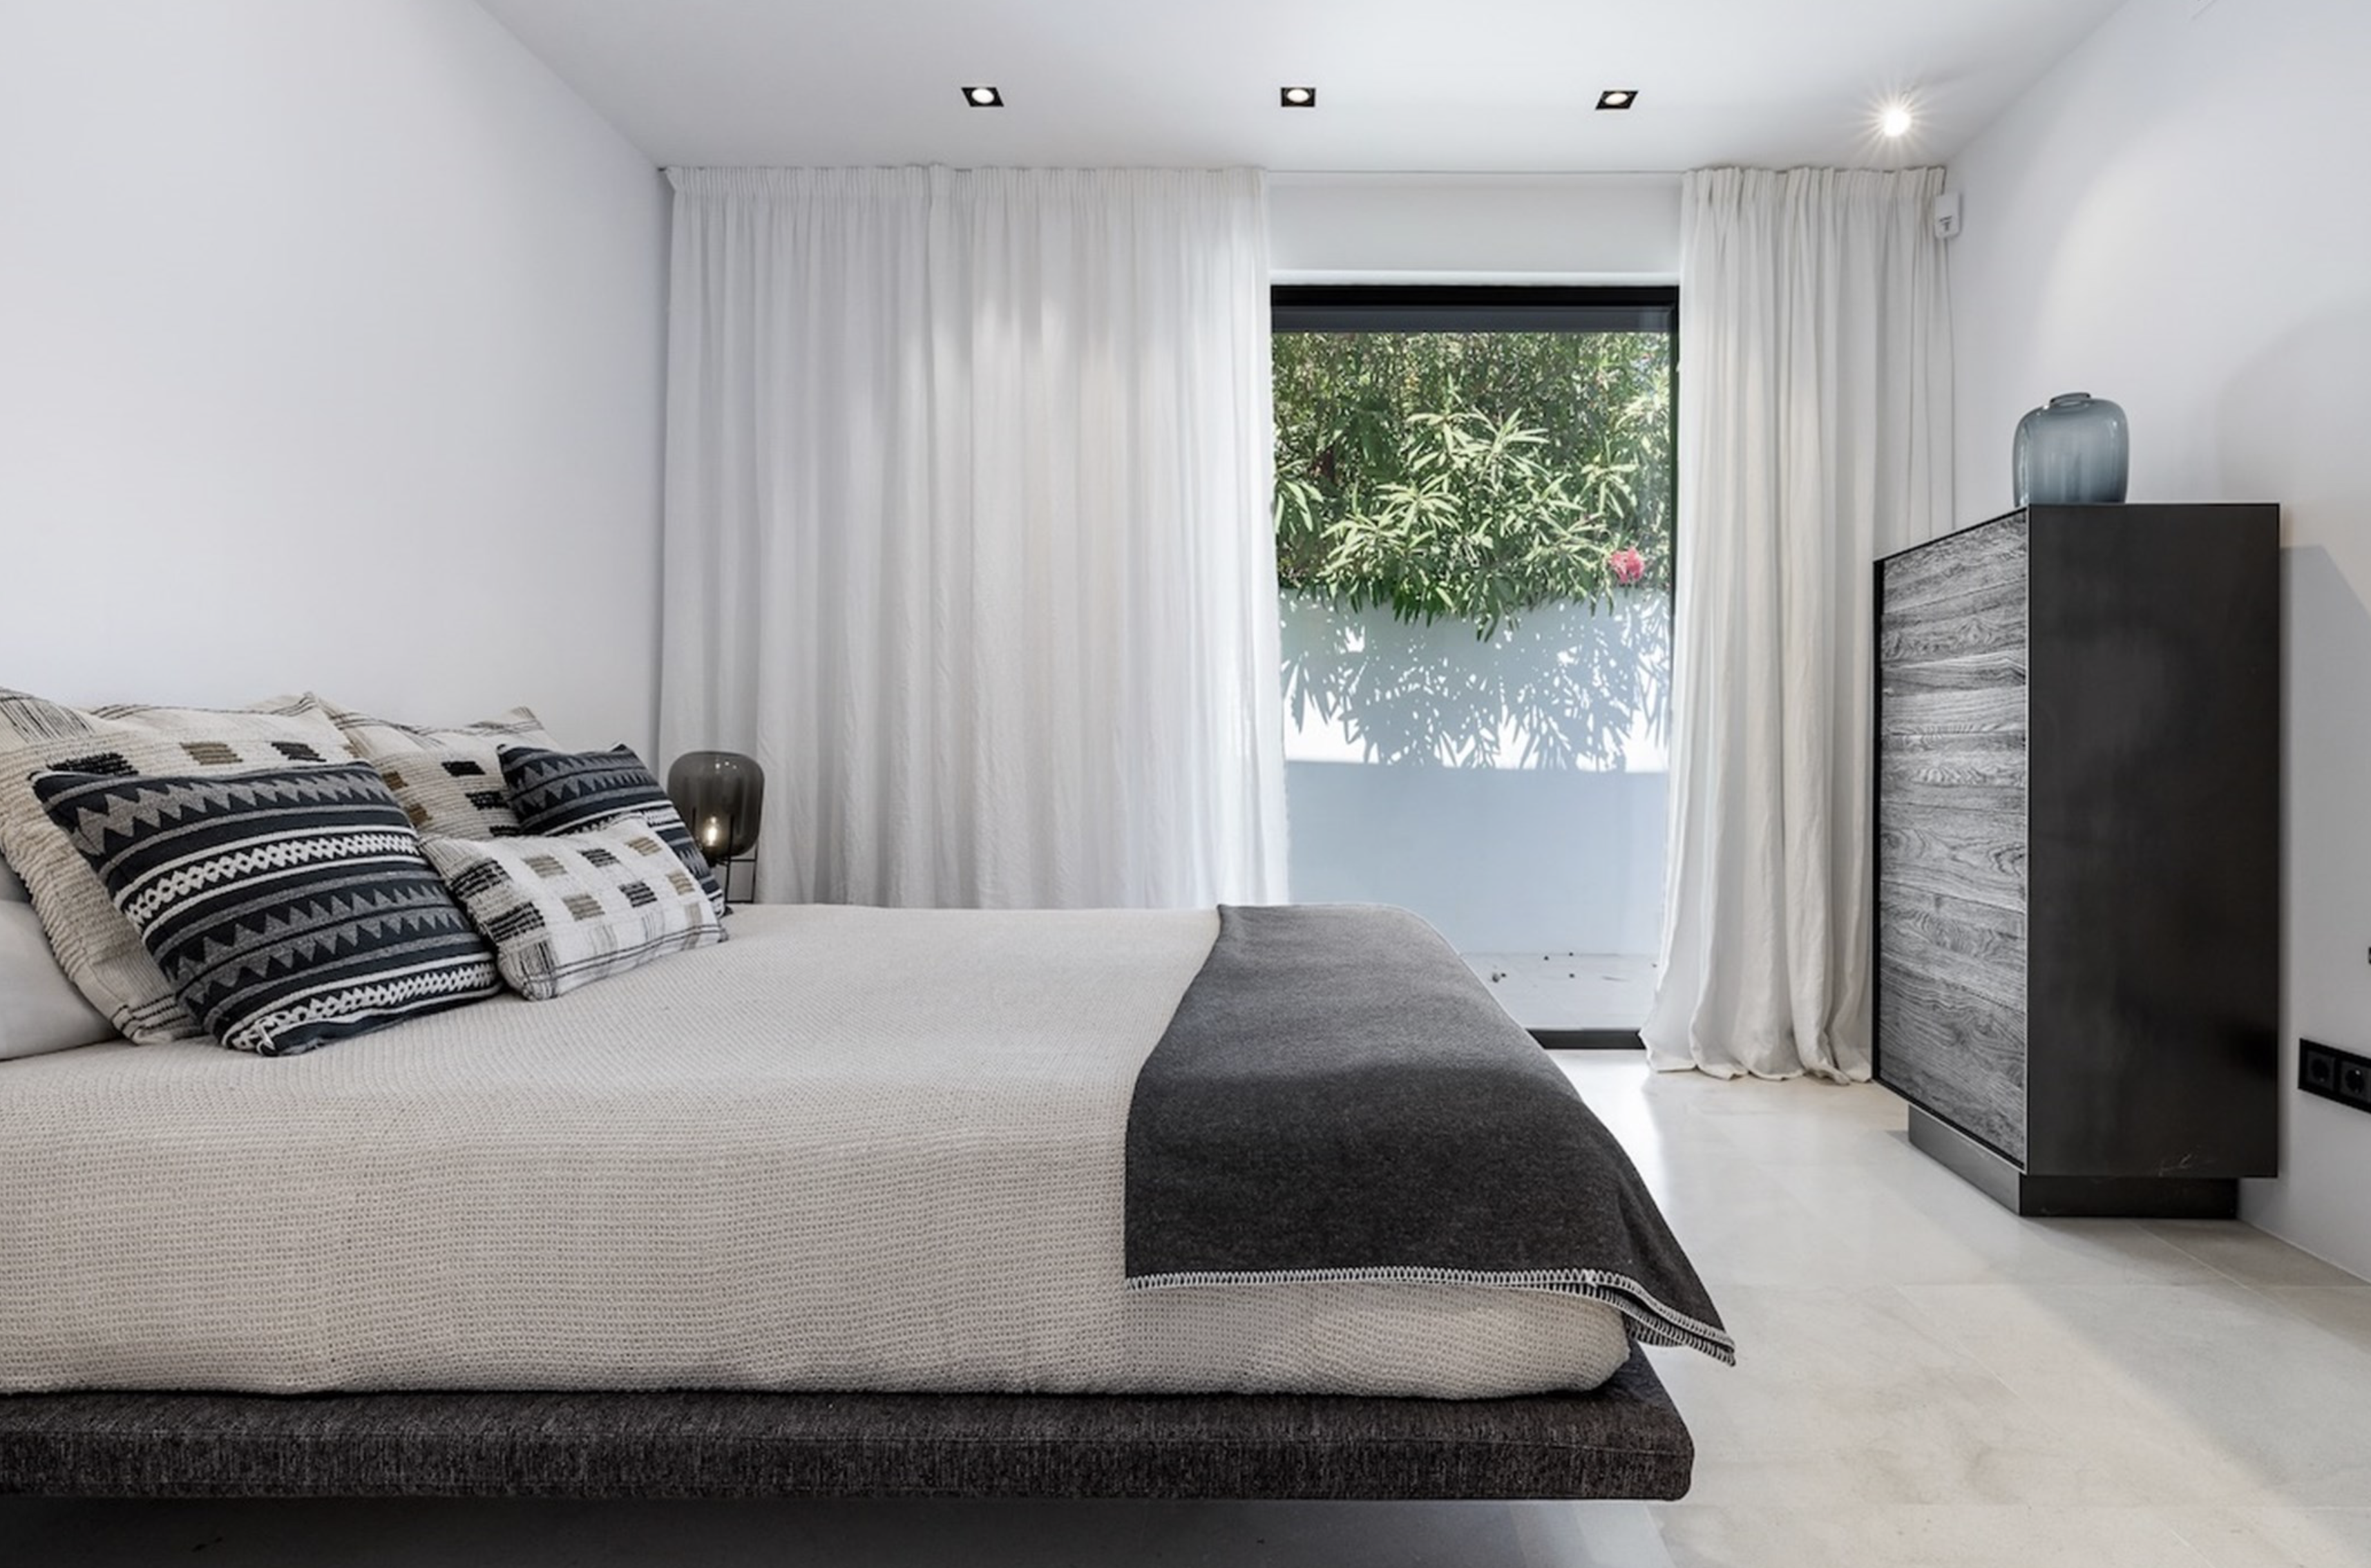 Resa Estates can nemo luxury villa Pep simo Ibiza bedroom 5.png